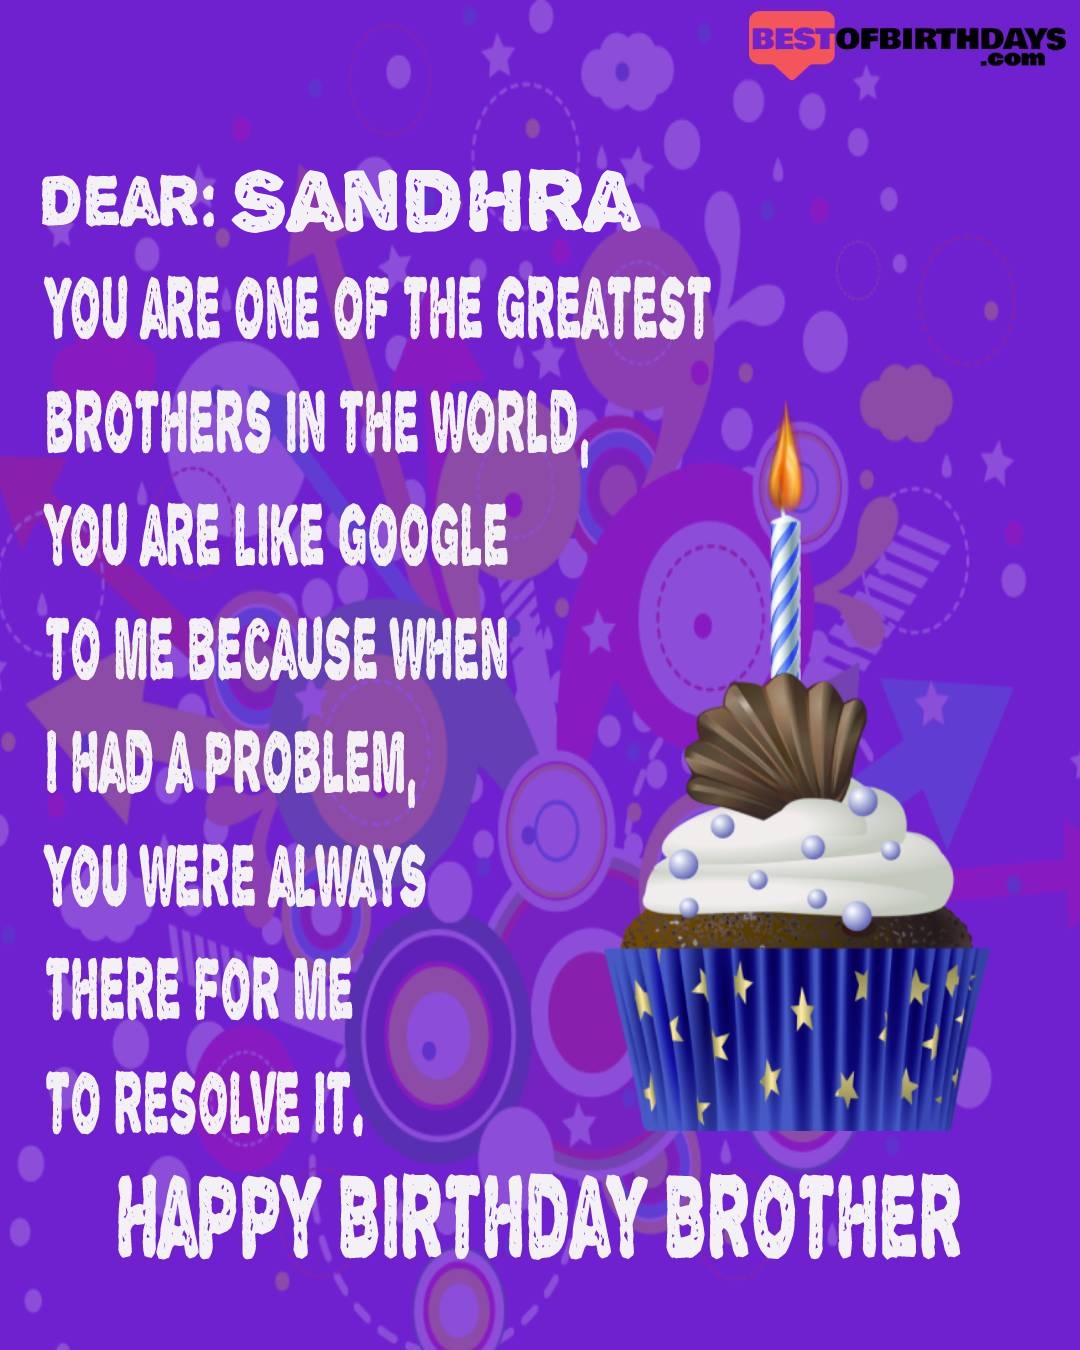 Happy birthday sandhra bhai brother bro